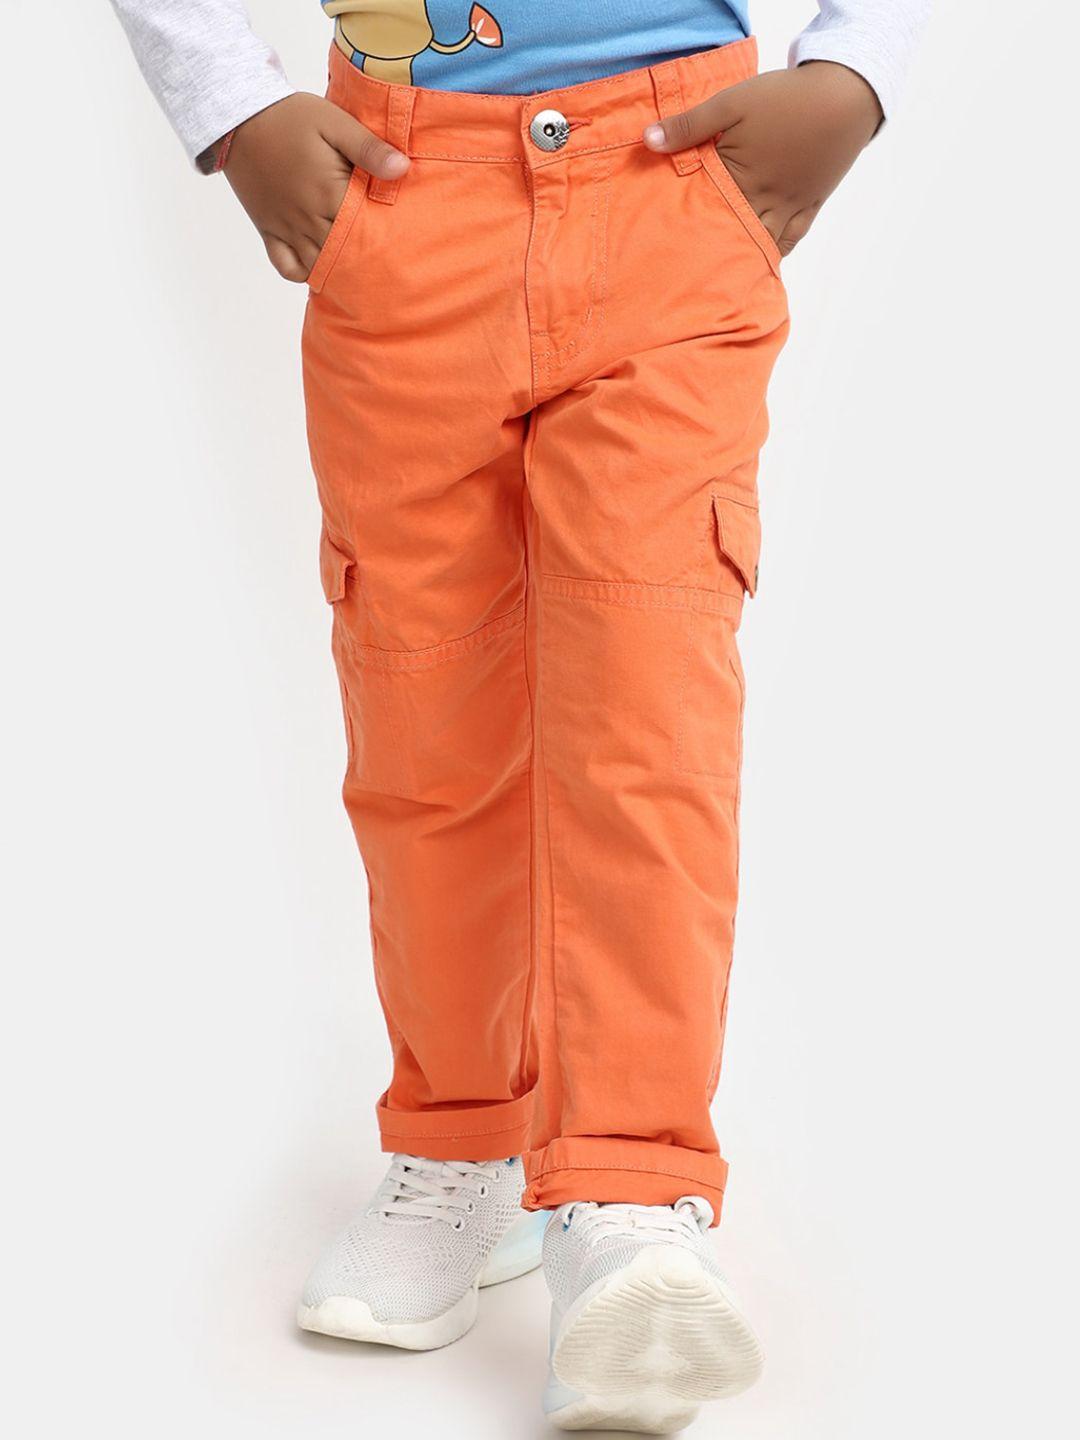 v-mart-boys-orange-mid-rise-cargos-trousers